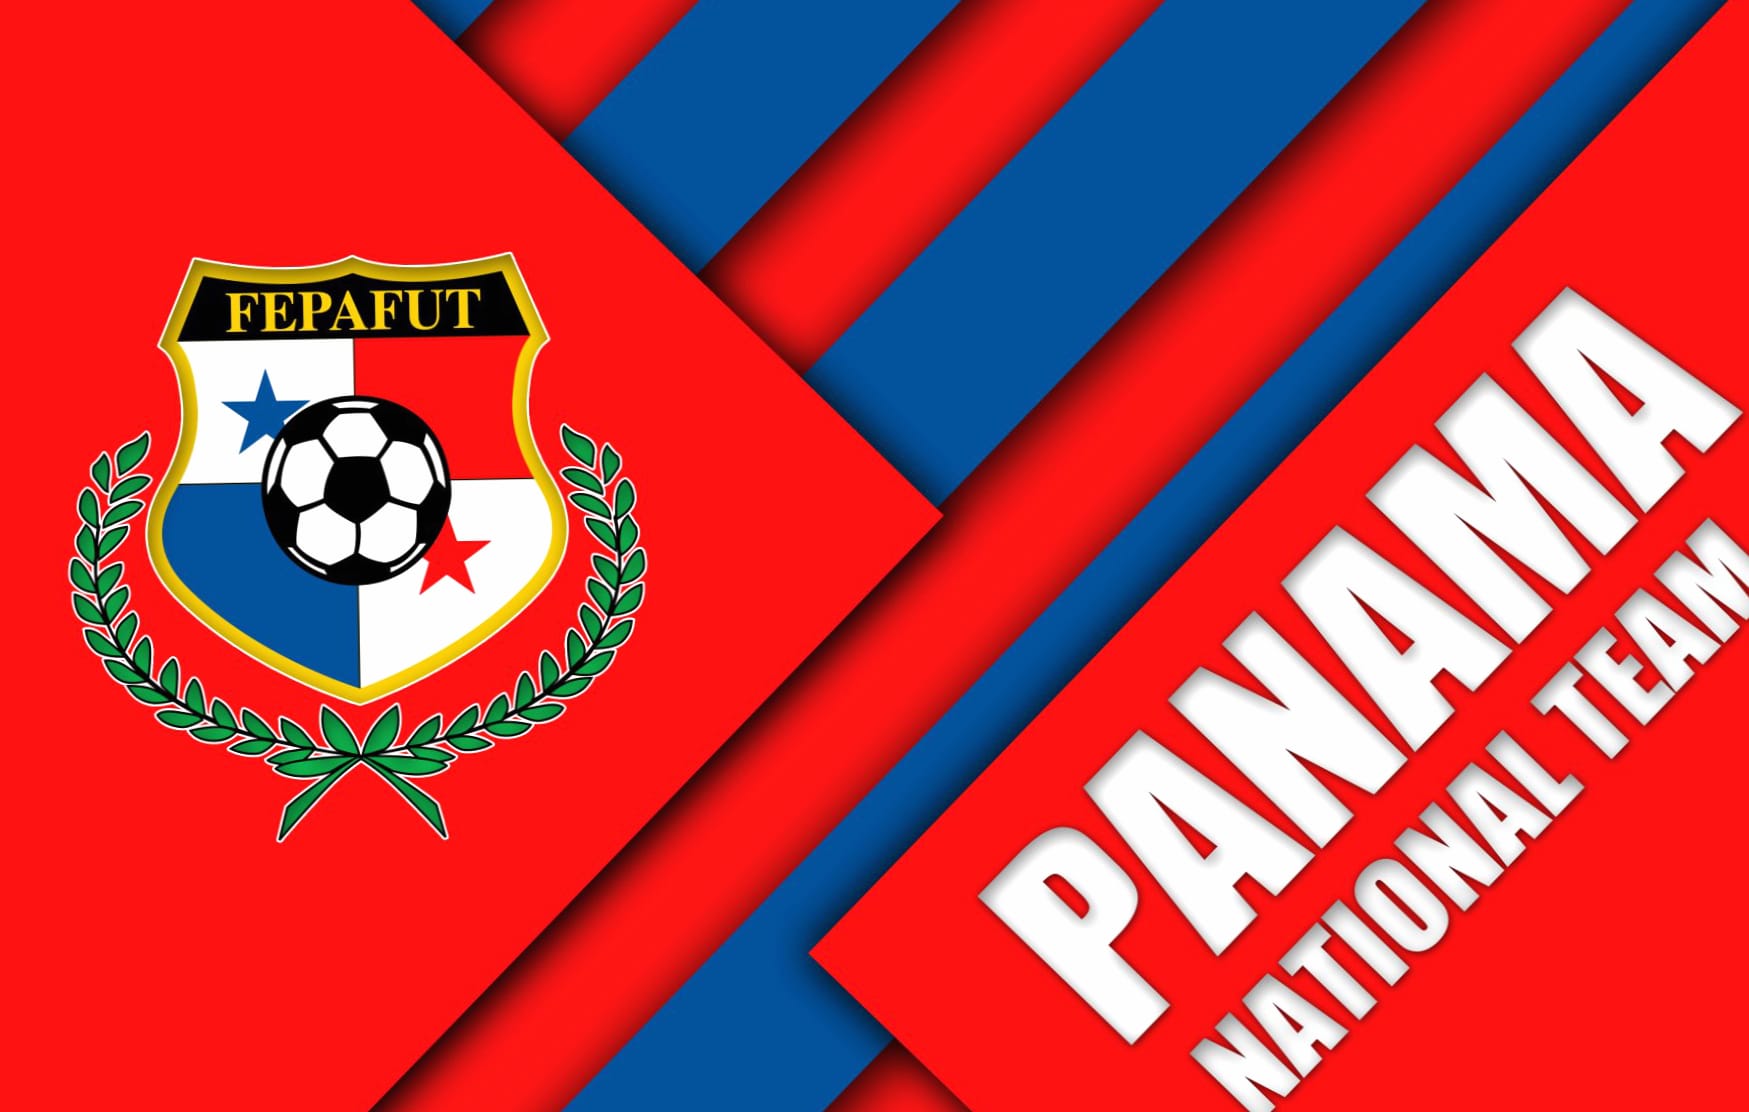 Panama National Football Team at 1024 x 1024 iPad size wallpapers HD quality